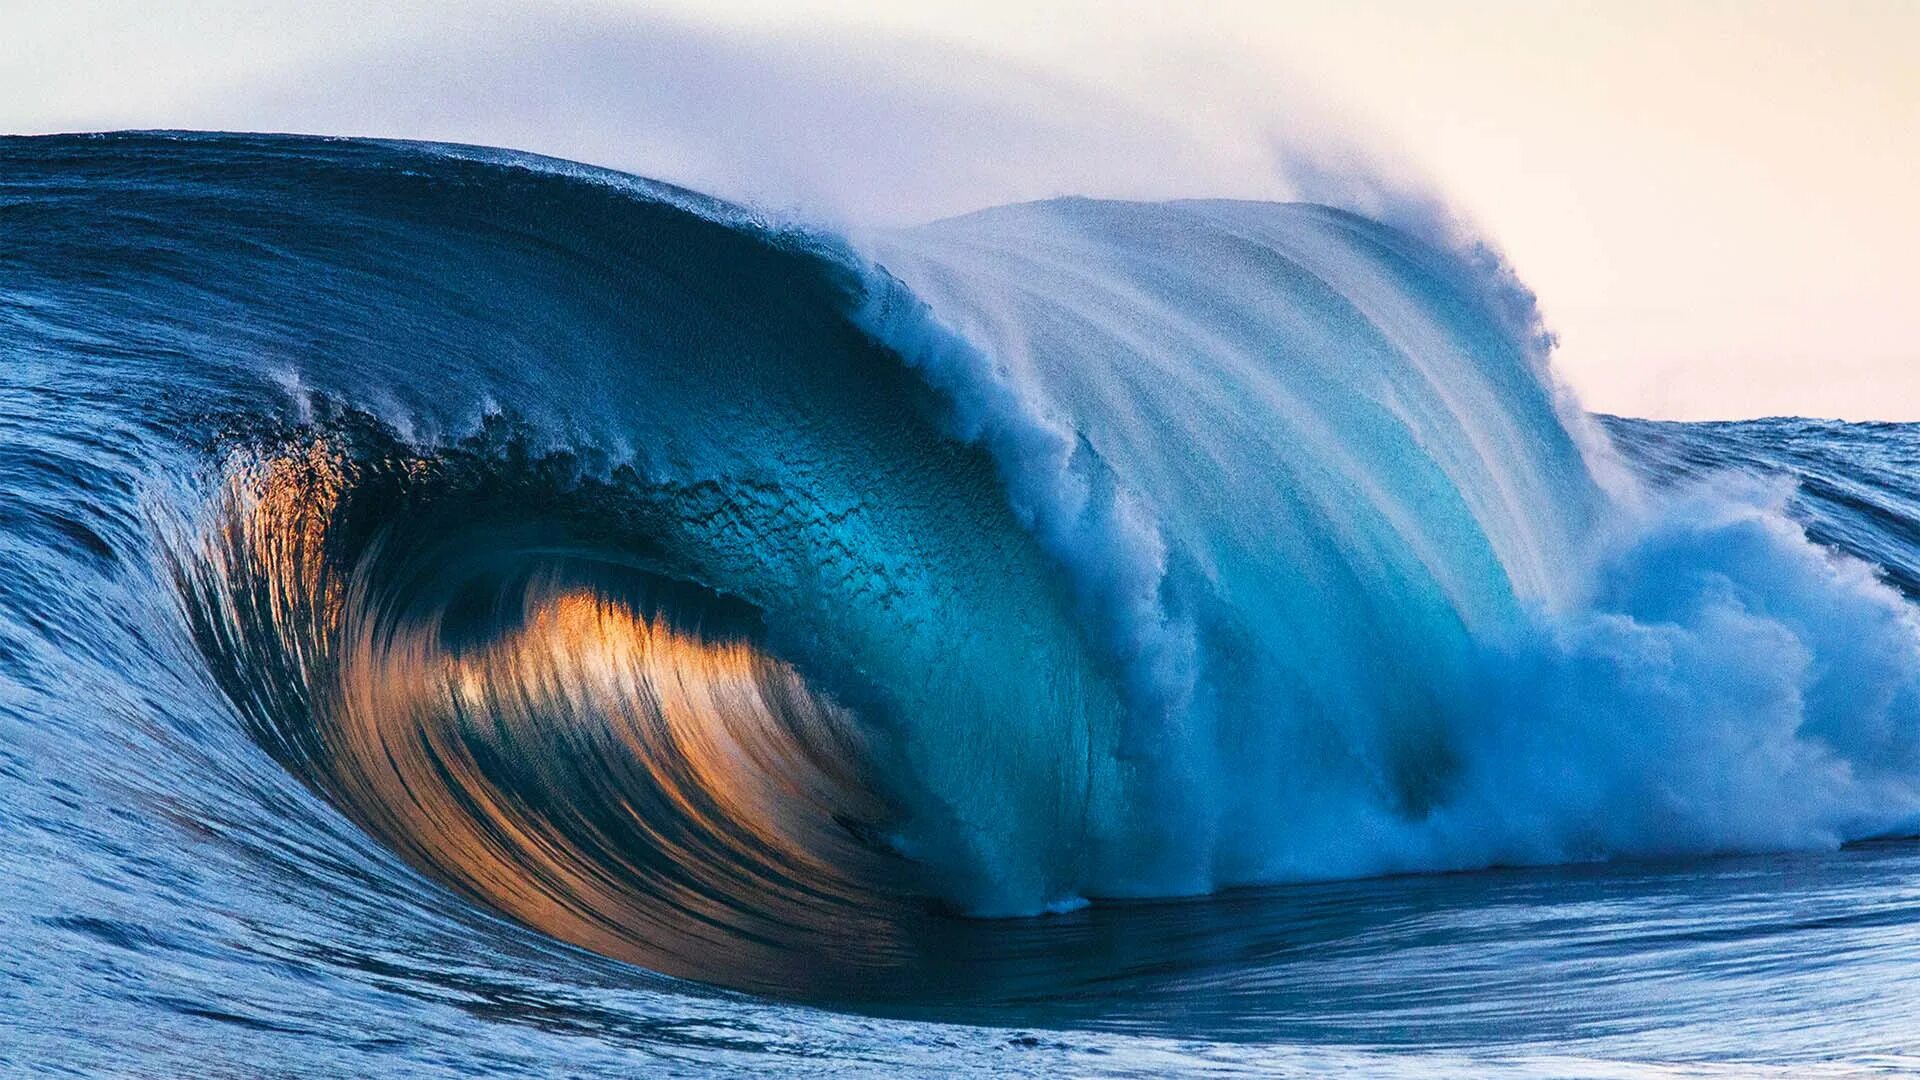 Spins waves waves. Волна циклопс. 360 Волны. Waves were Breaking. Waves TL.